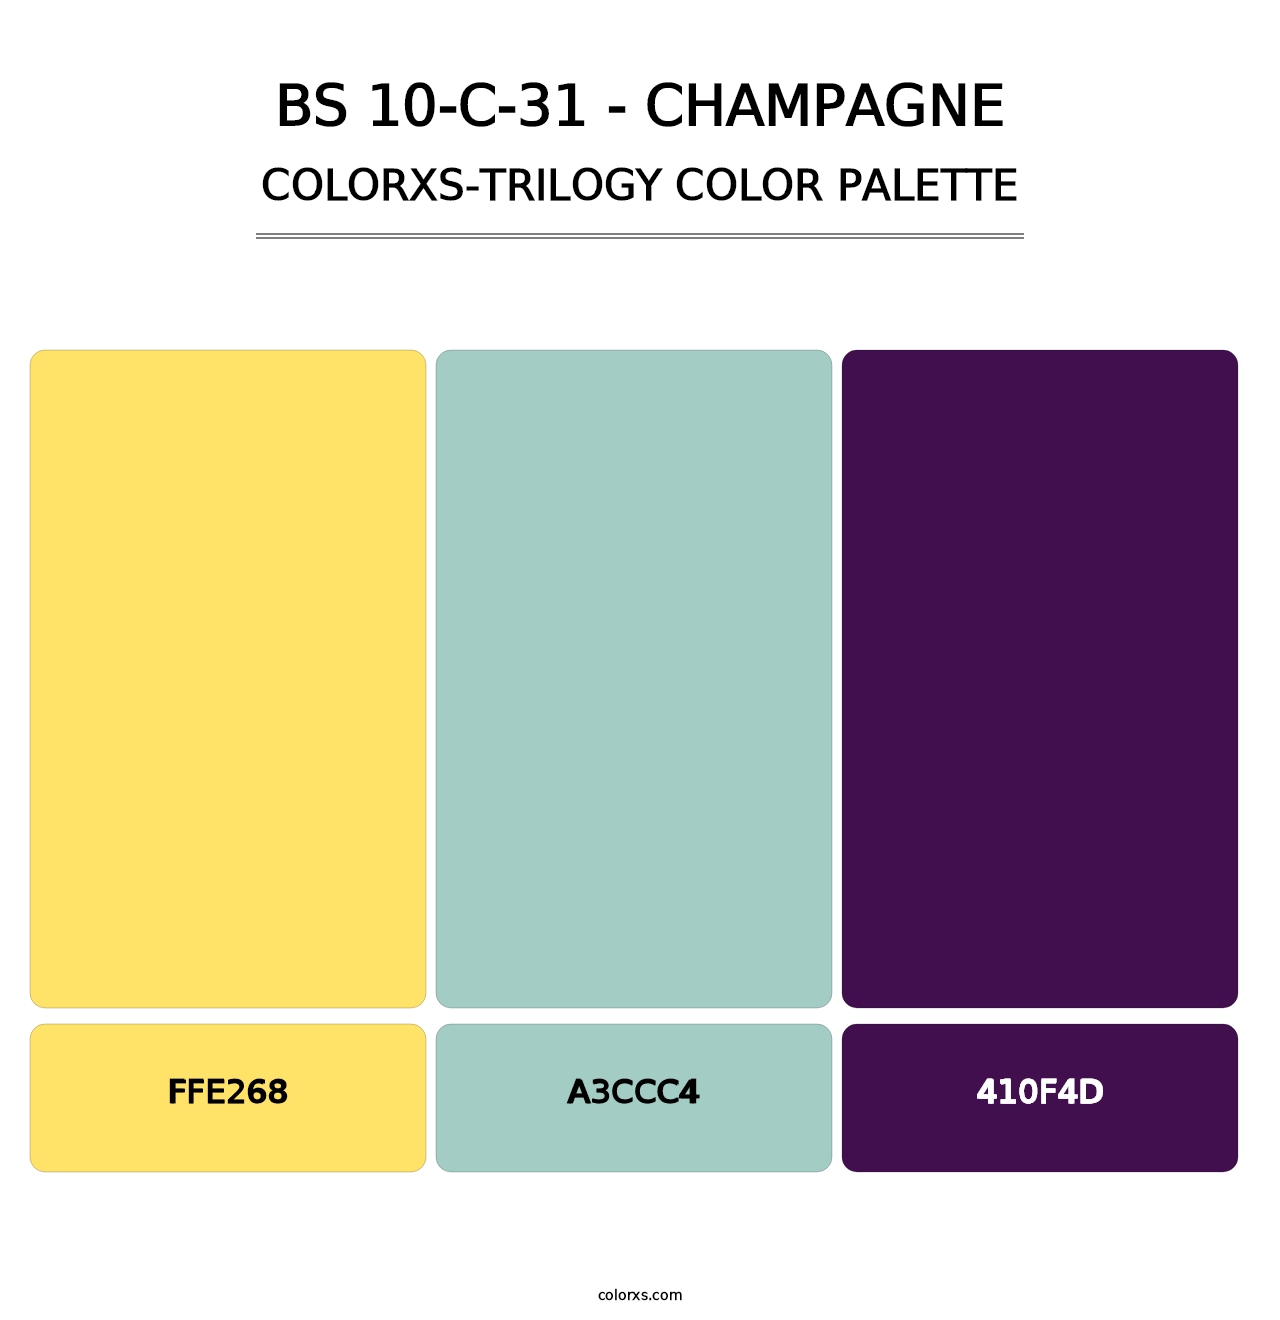 BS 10-C-31 - Champagne - Colorxs Trilogy Palette